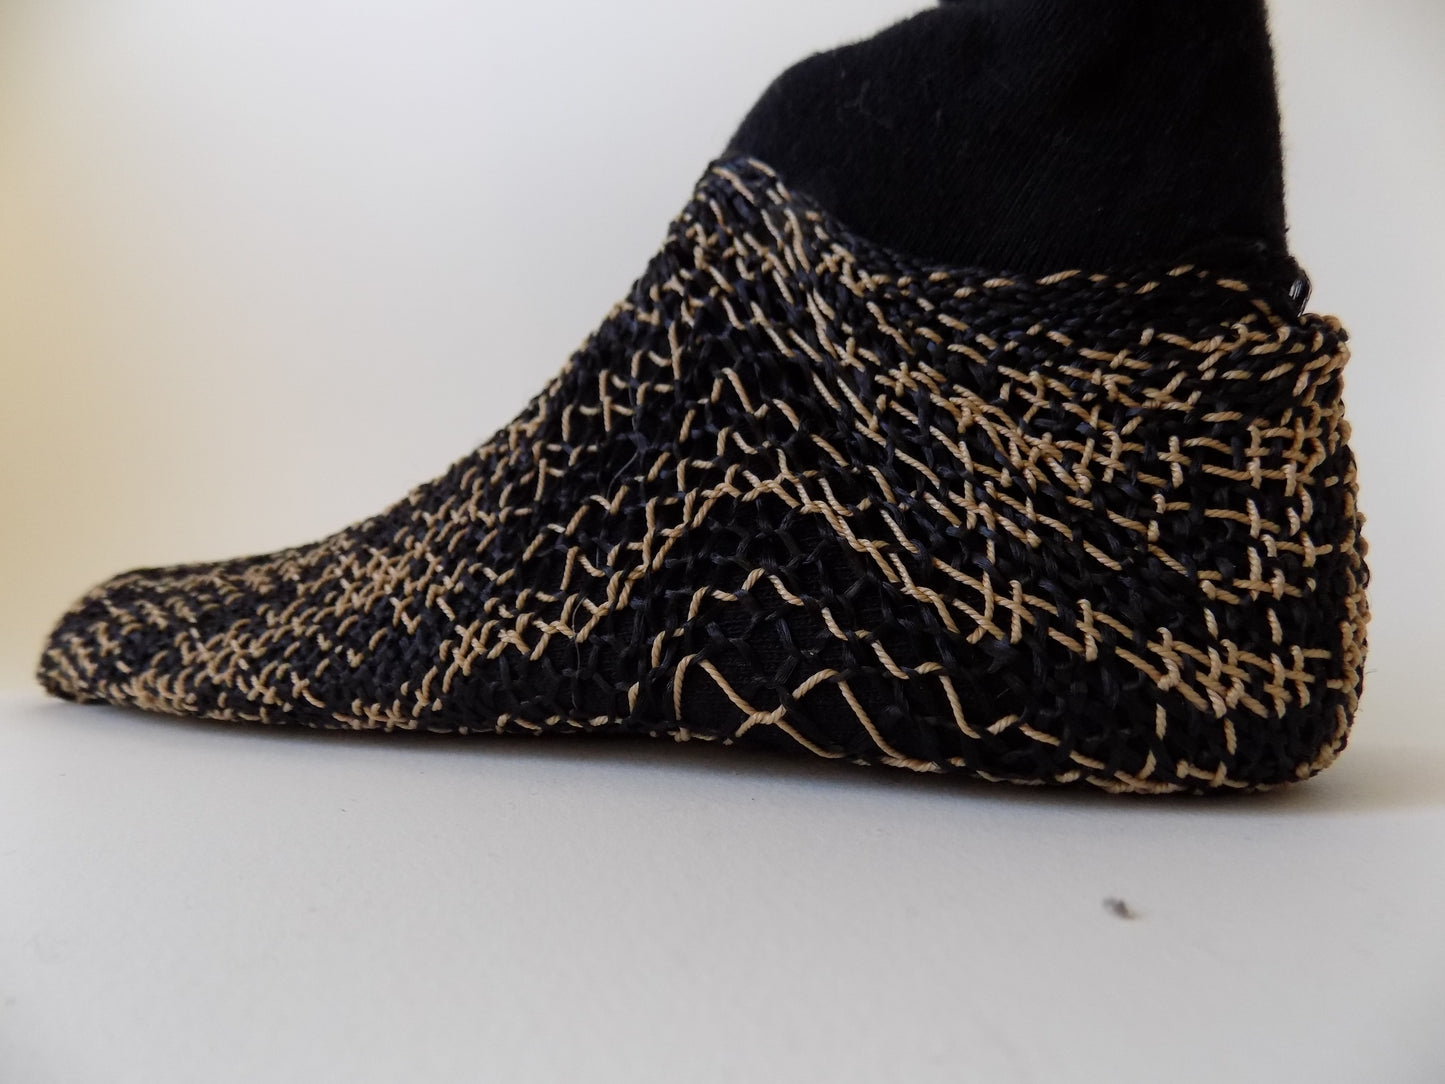 Footwear Patterning Fabric Studies